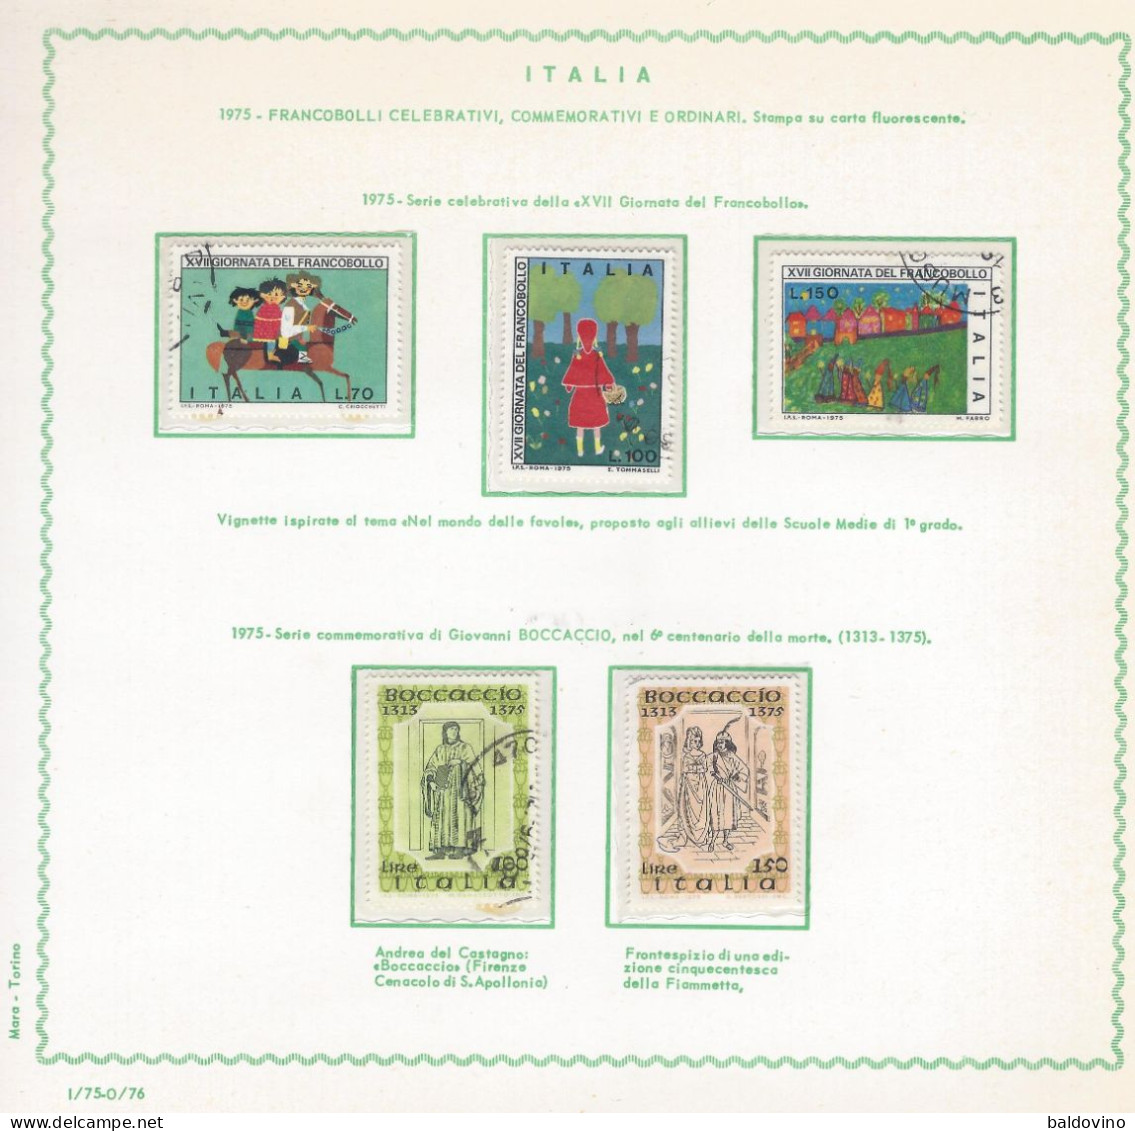 Italia 1975 Annata completa usata 43 valori